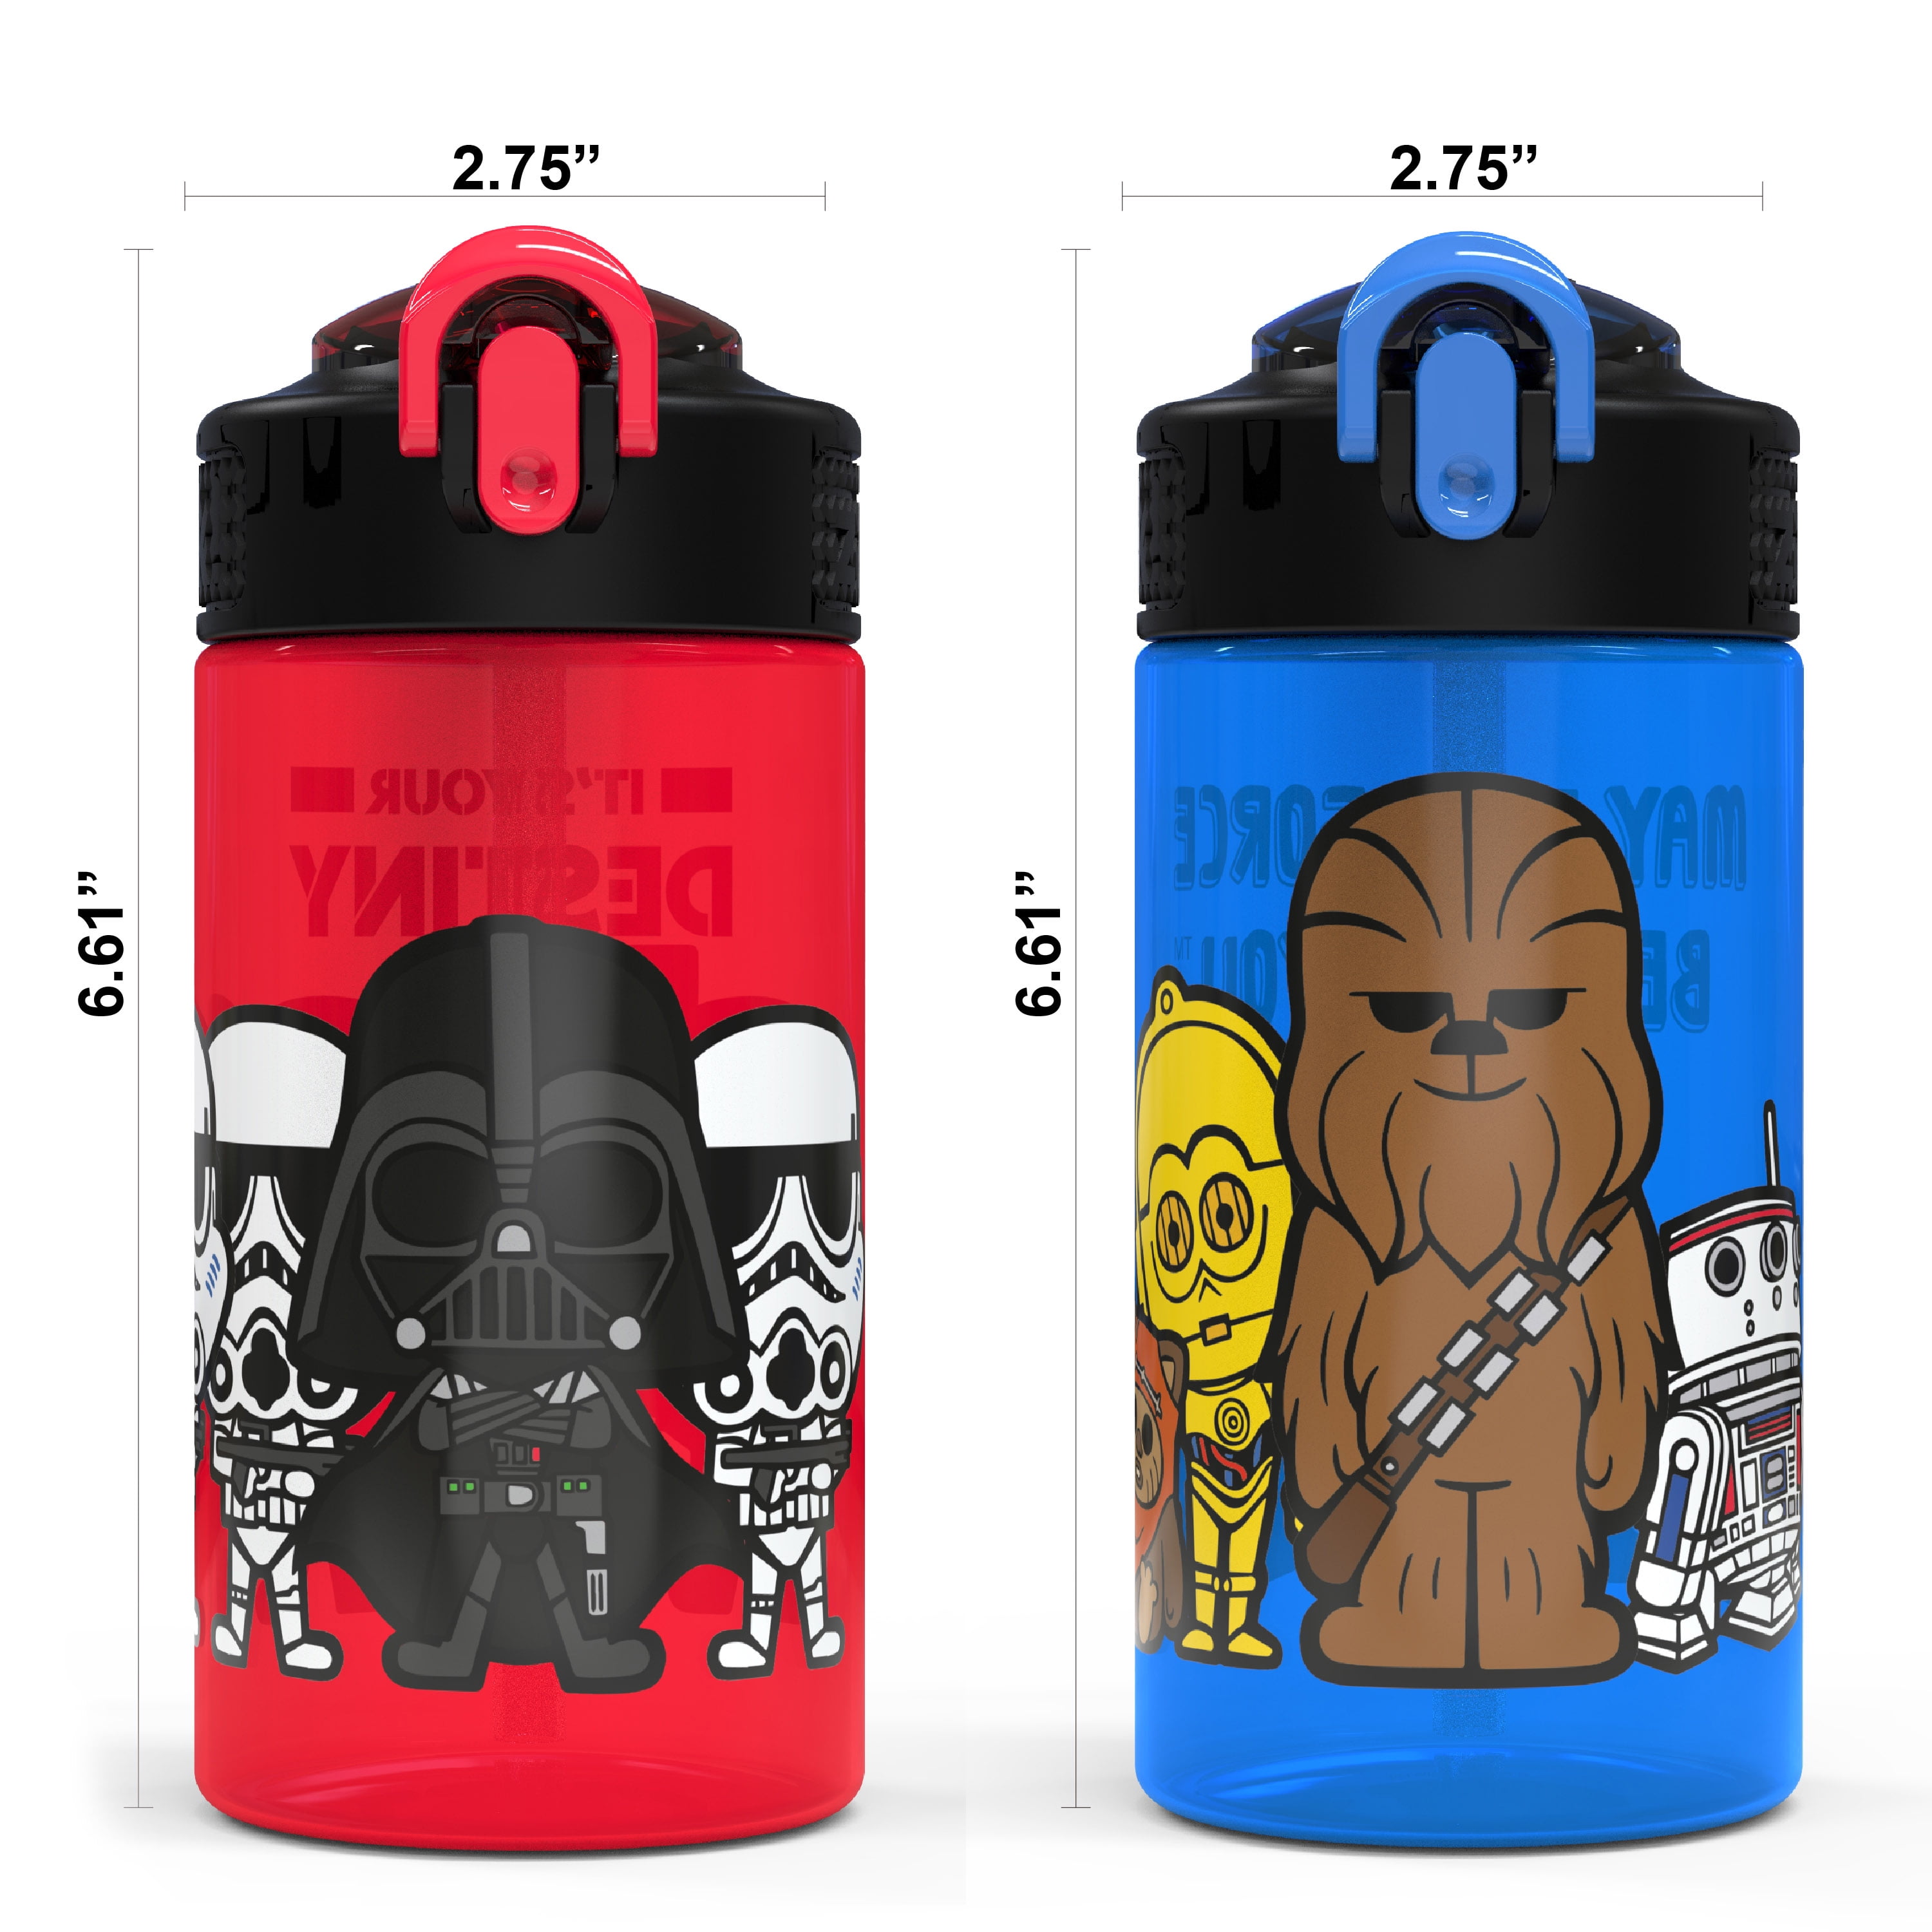 Star Wars The Child 19oz Stainless Steel Vacuum Water Bottle - Zak Designs  19 oz